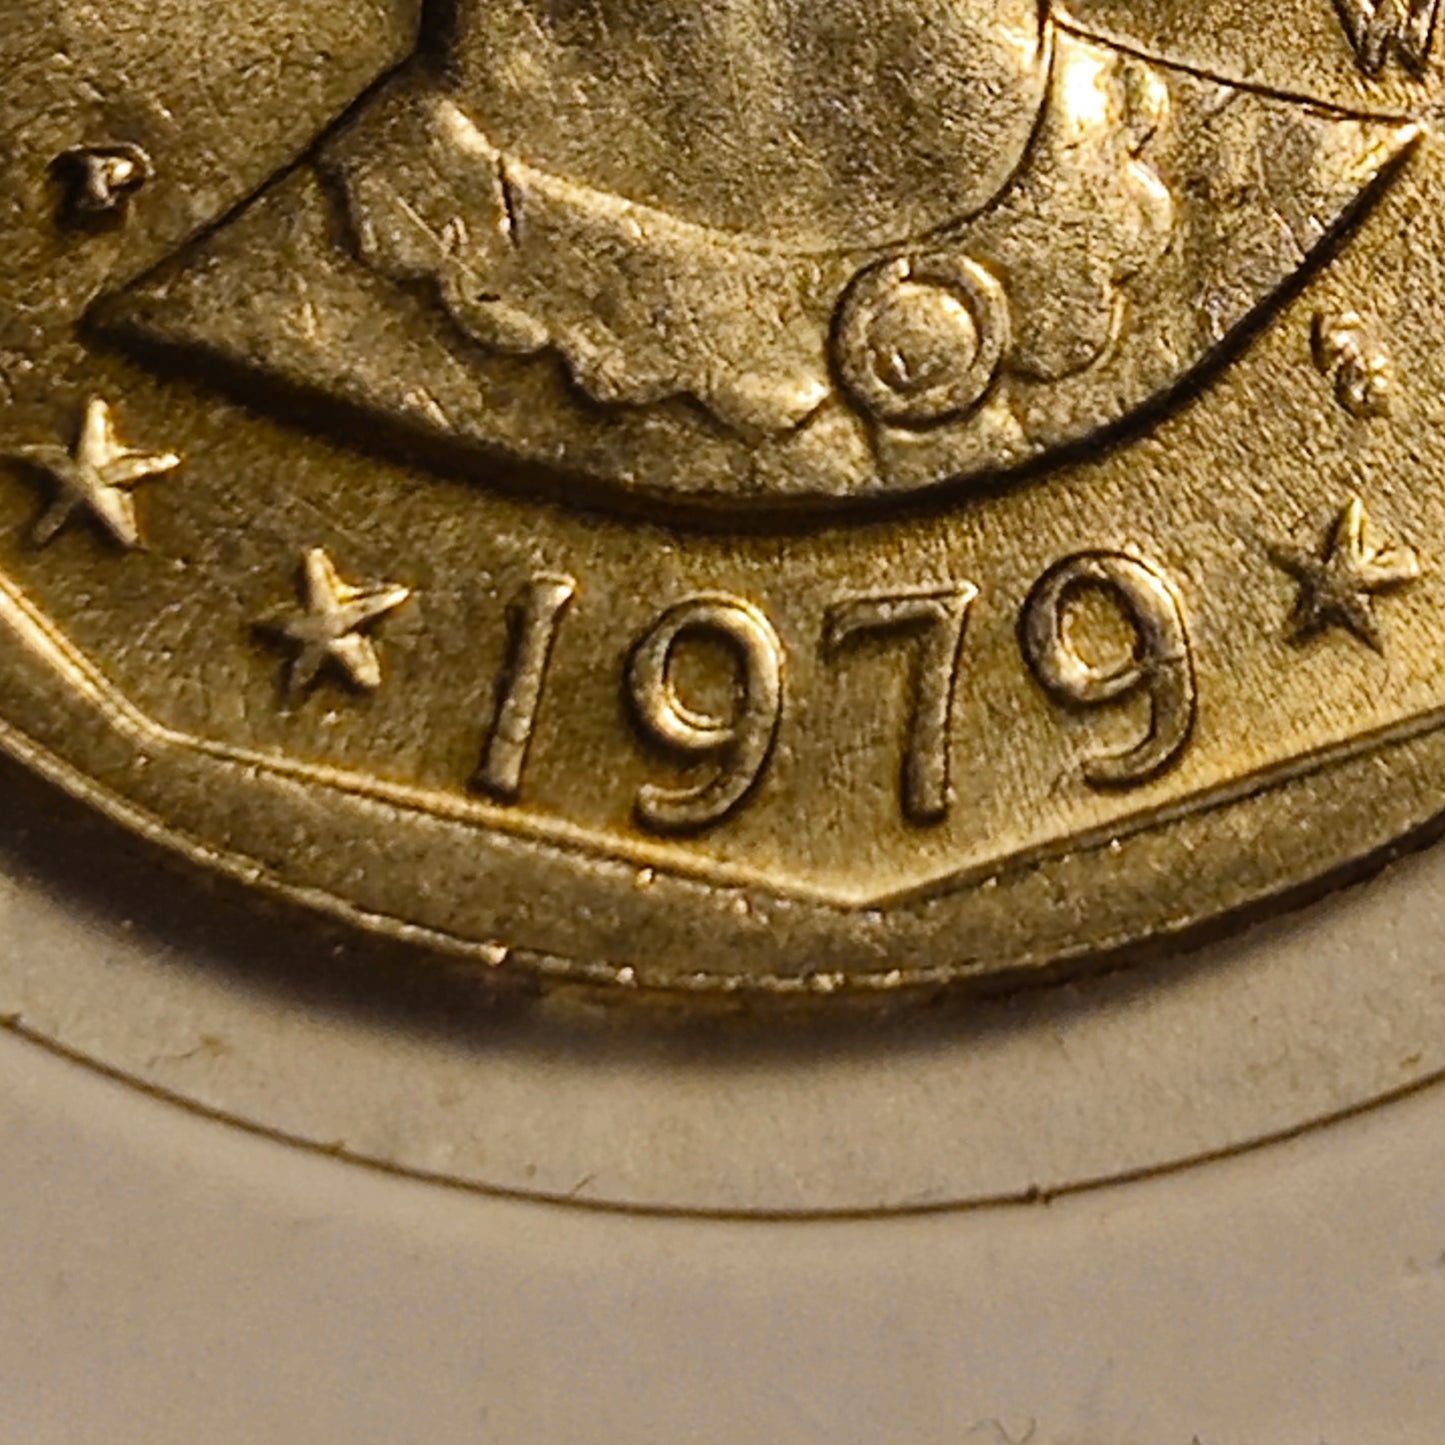 1979-P Susan B. Anthony Dollar Ungraded Mint State Near Date Key Variety